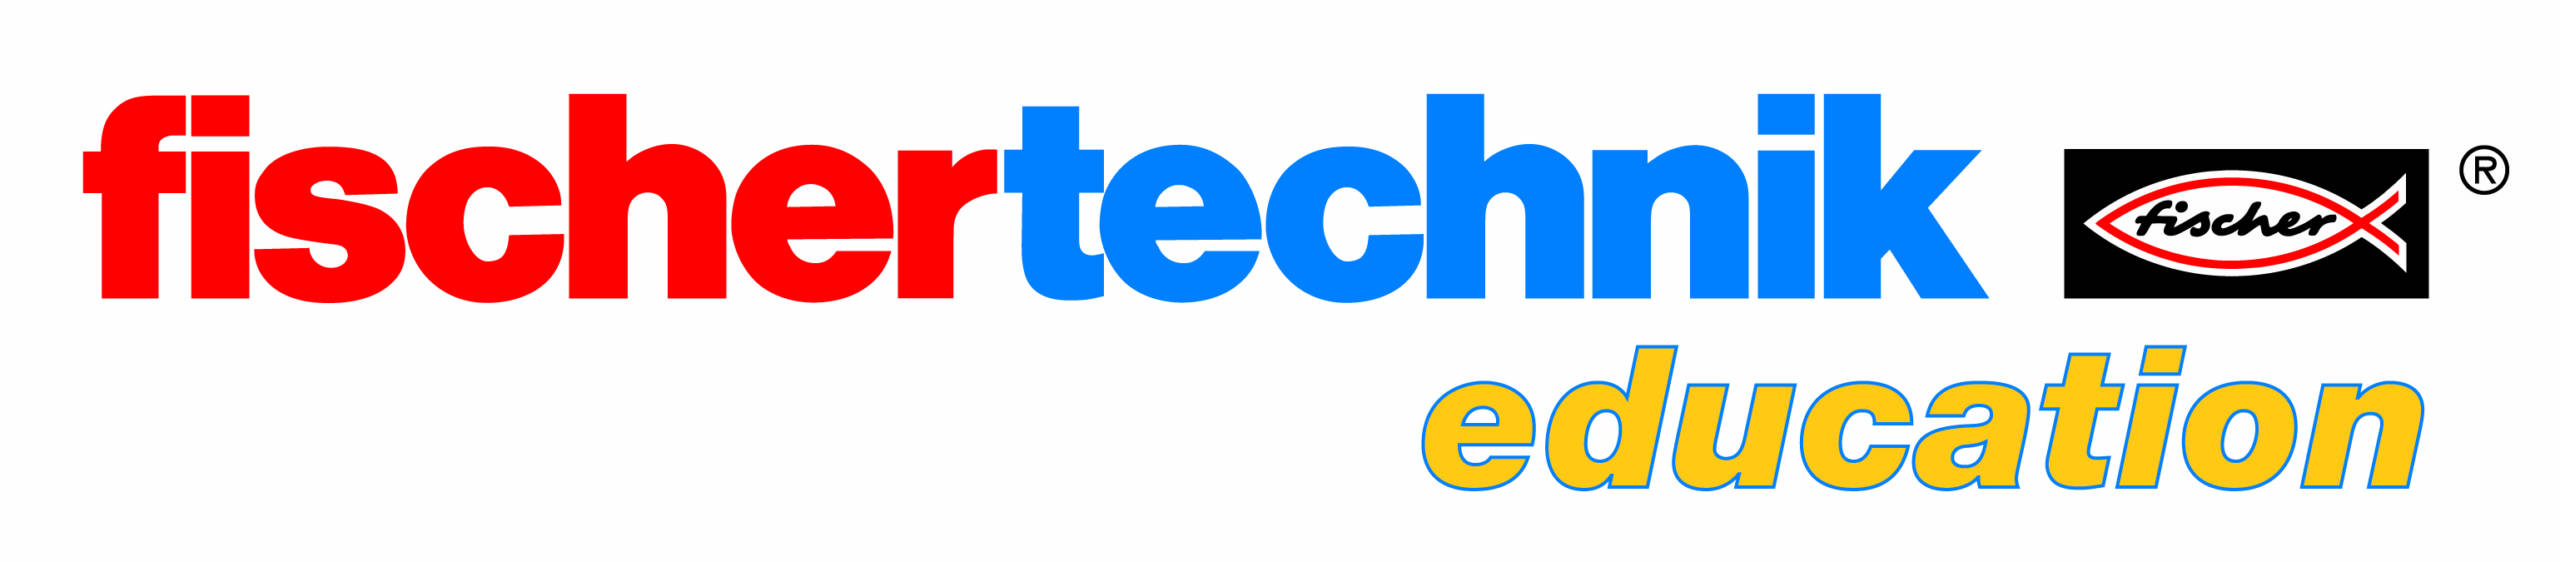 Fischer Technik Education